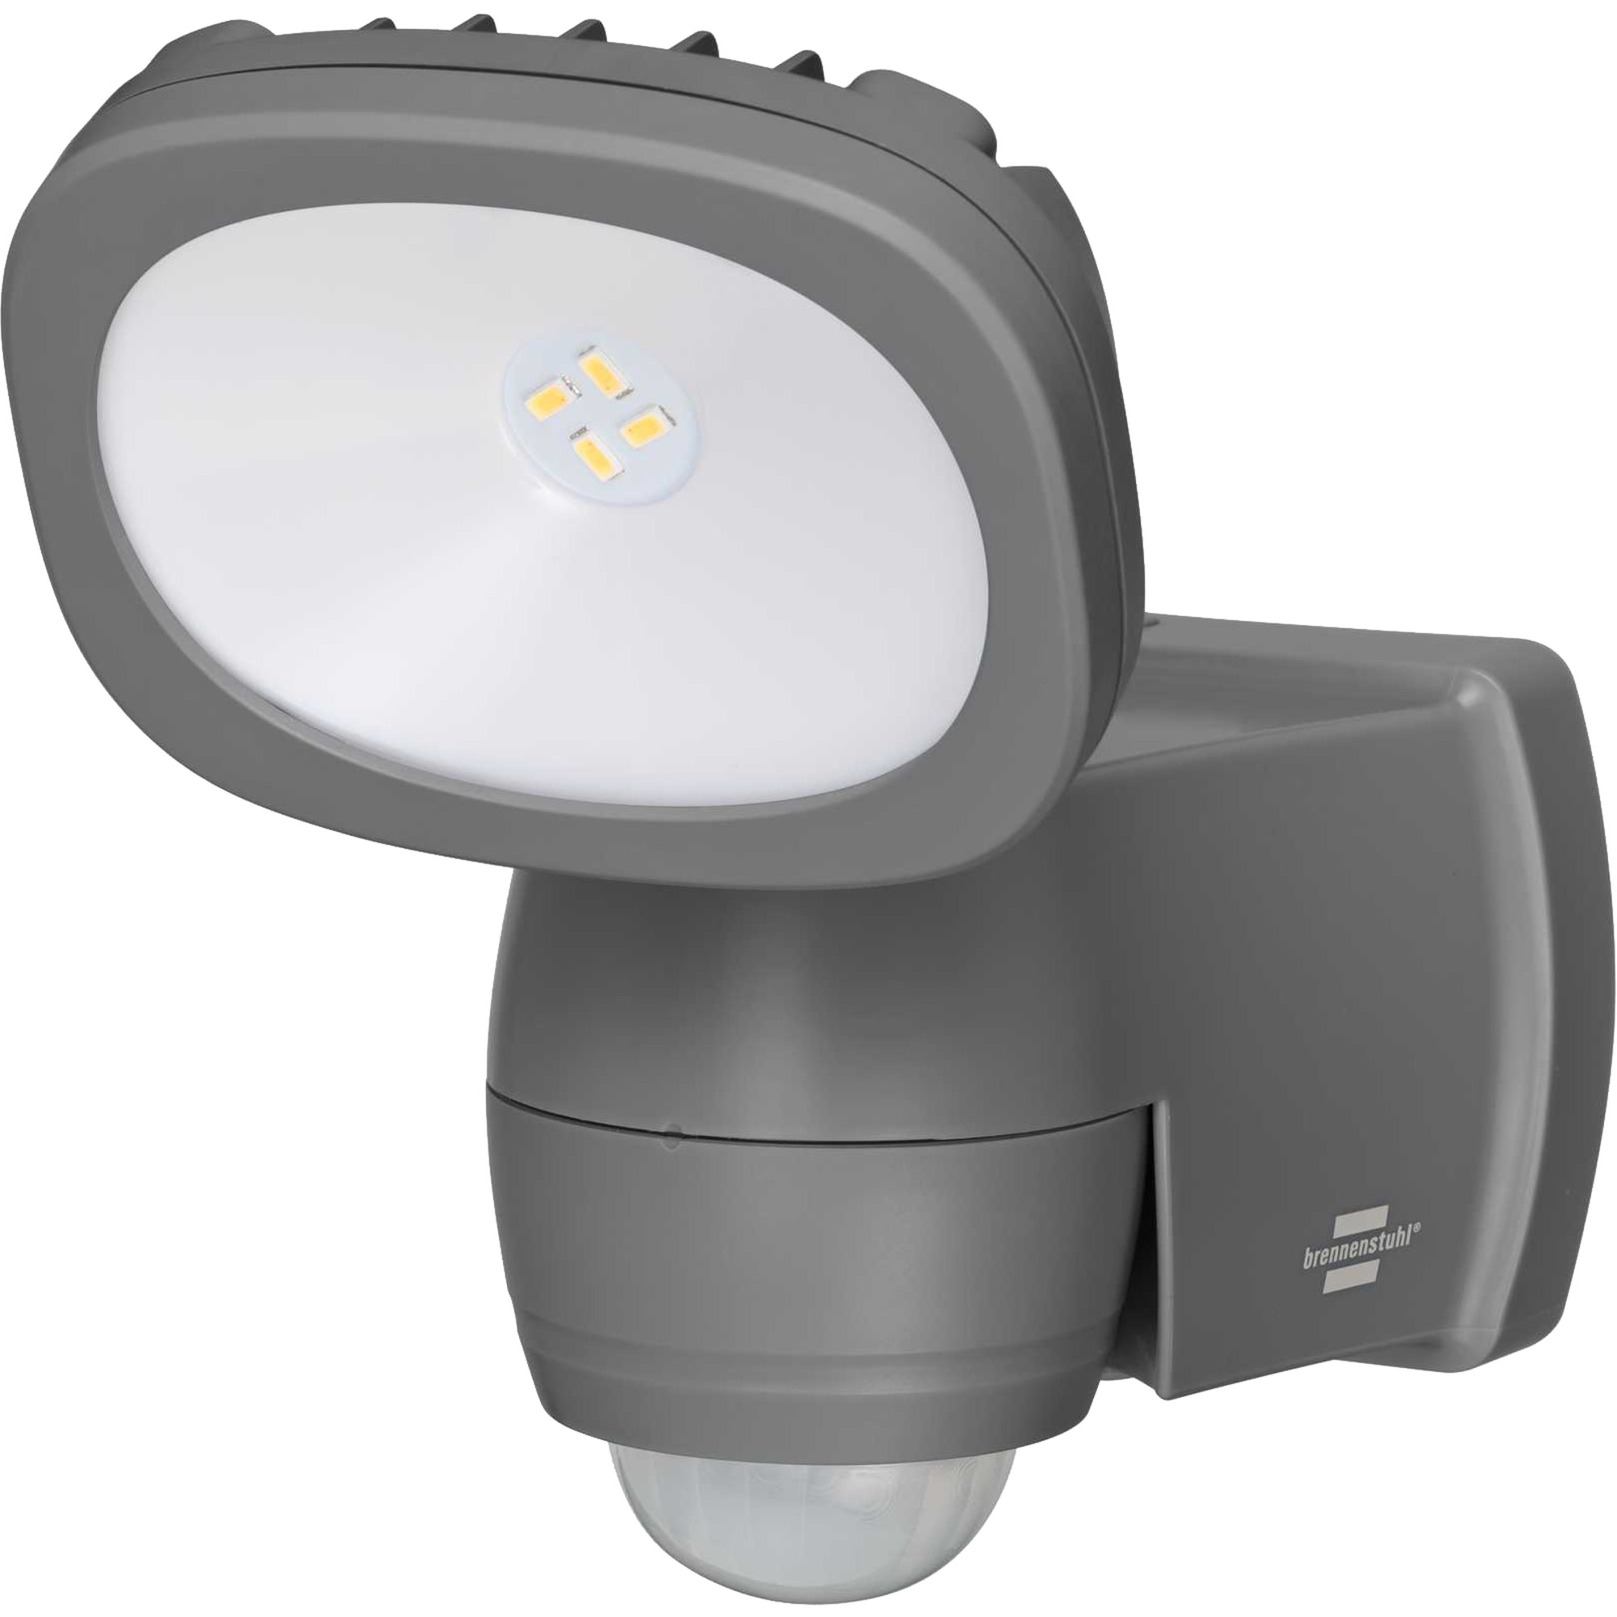 Image of Alternate - Batterie-LED-Strahler LUFOS, LED-Leuchte online einkaufen bei Alternate